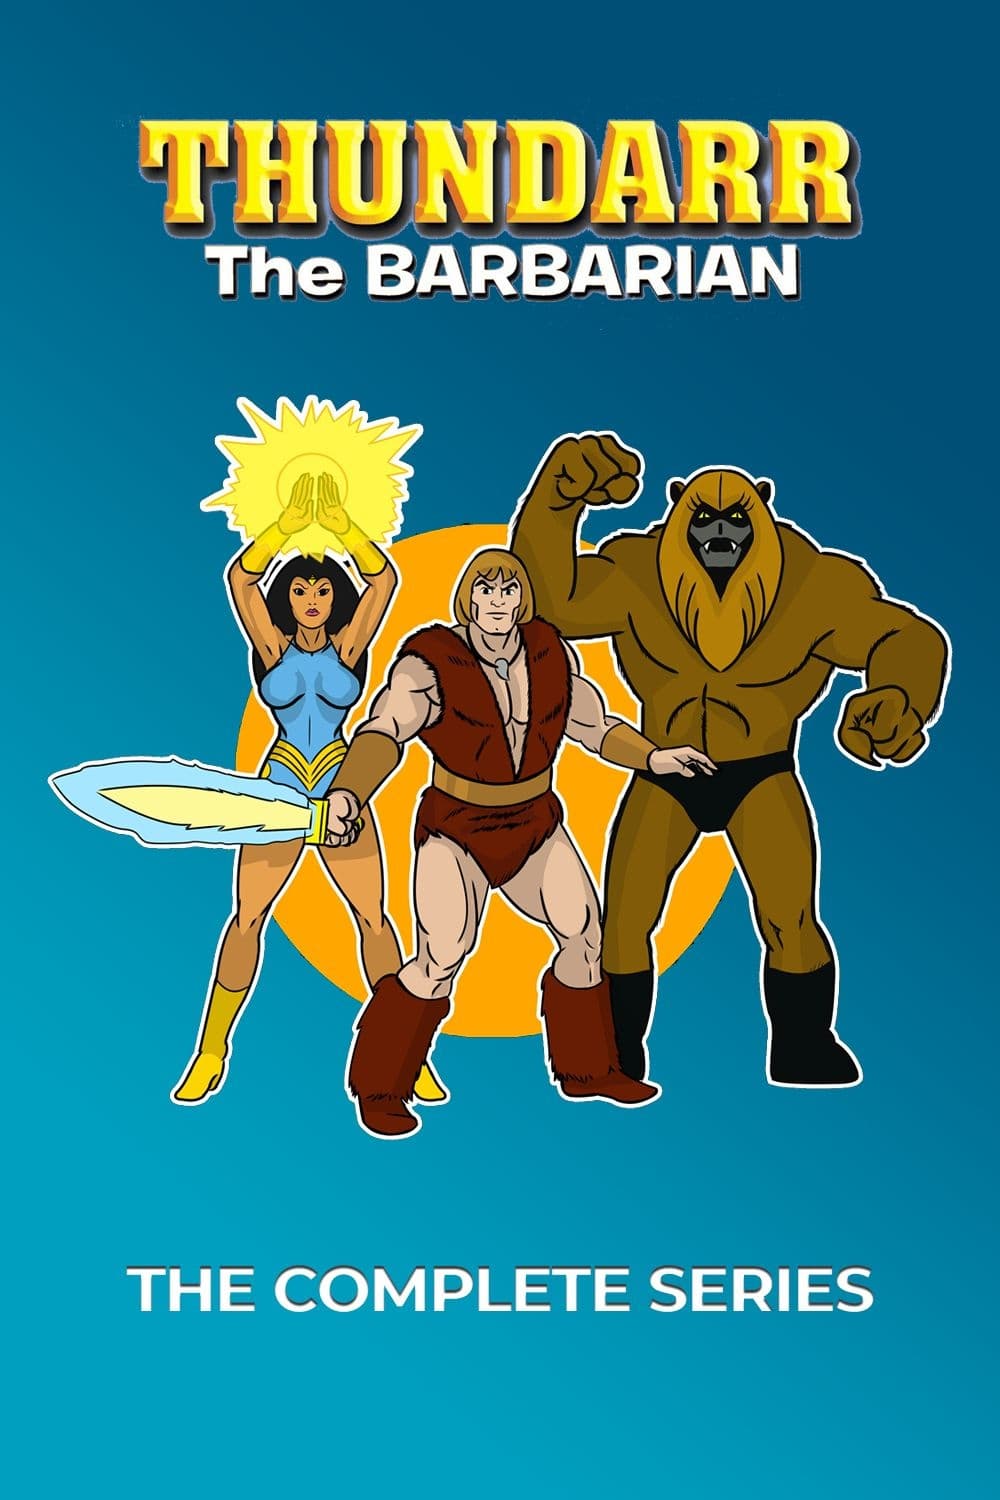 Thundarr the barbarian full episodes free